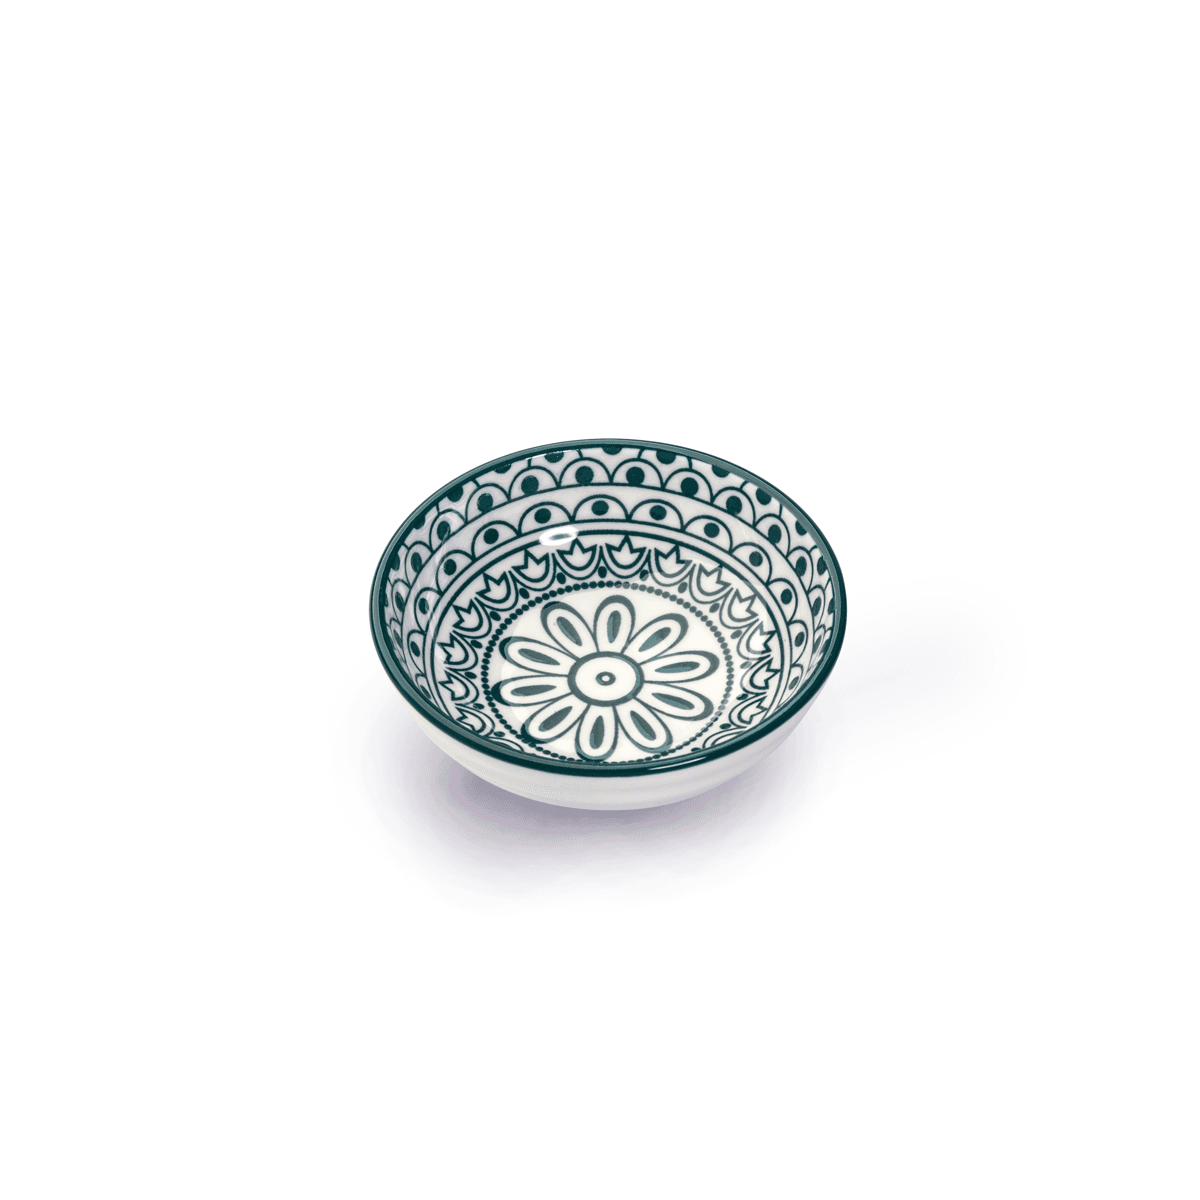 Che Brucia Arabesque Green Porcelain Round Dish 8 cm / 3" Green White Porcelain